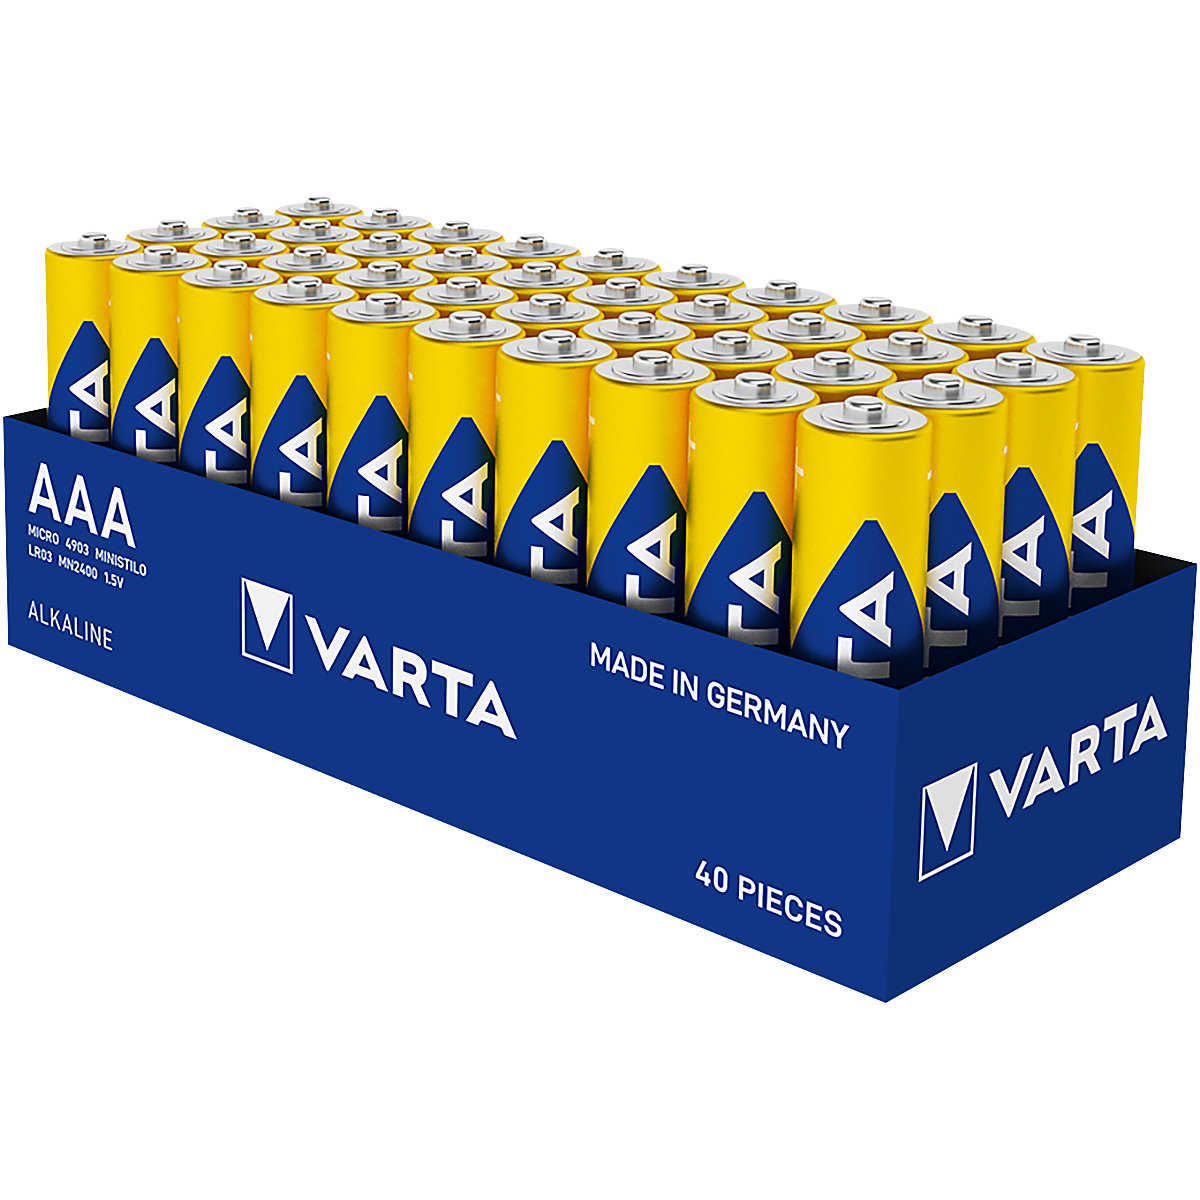 Piles x2 AA Longlife R6 Varta - Sanifer